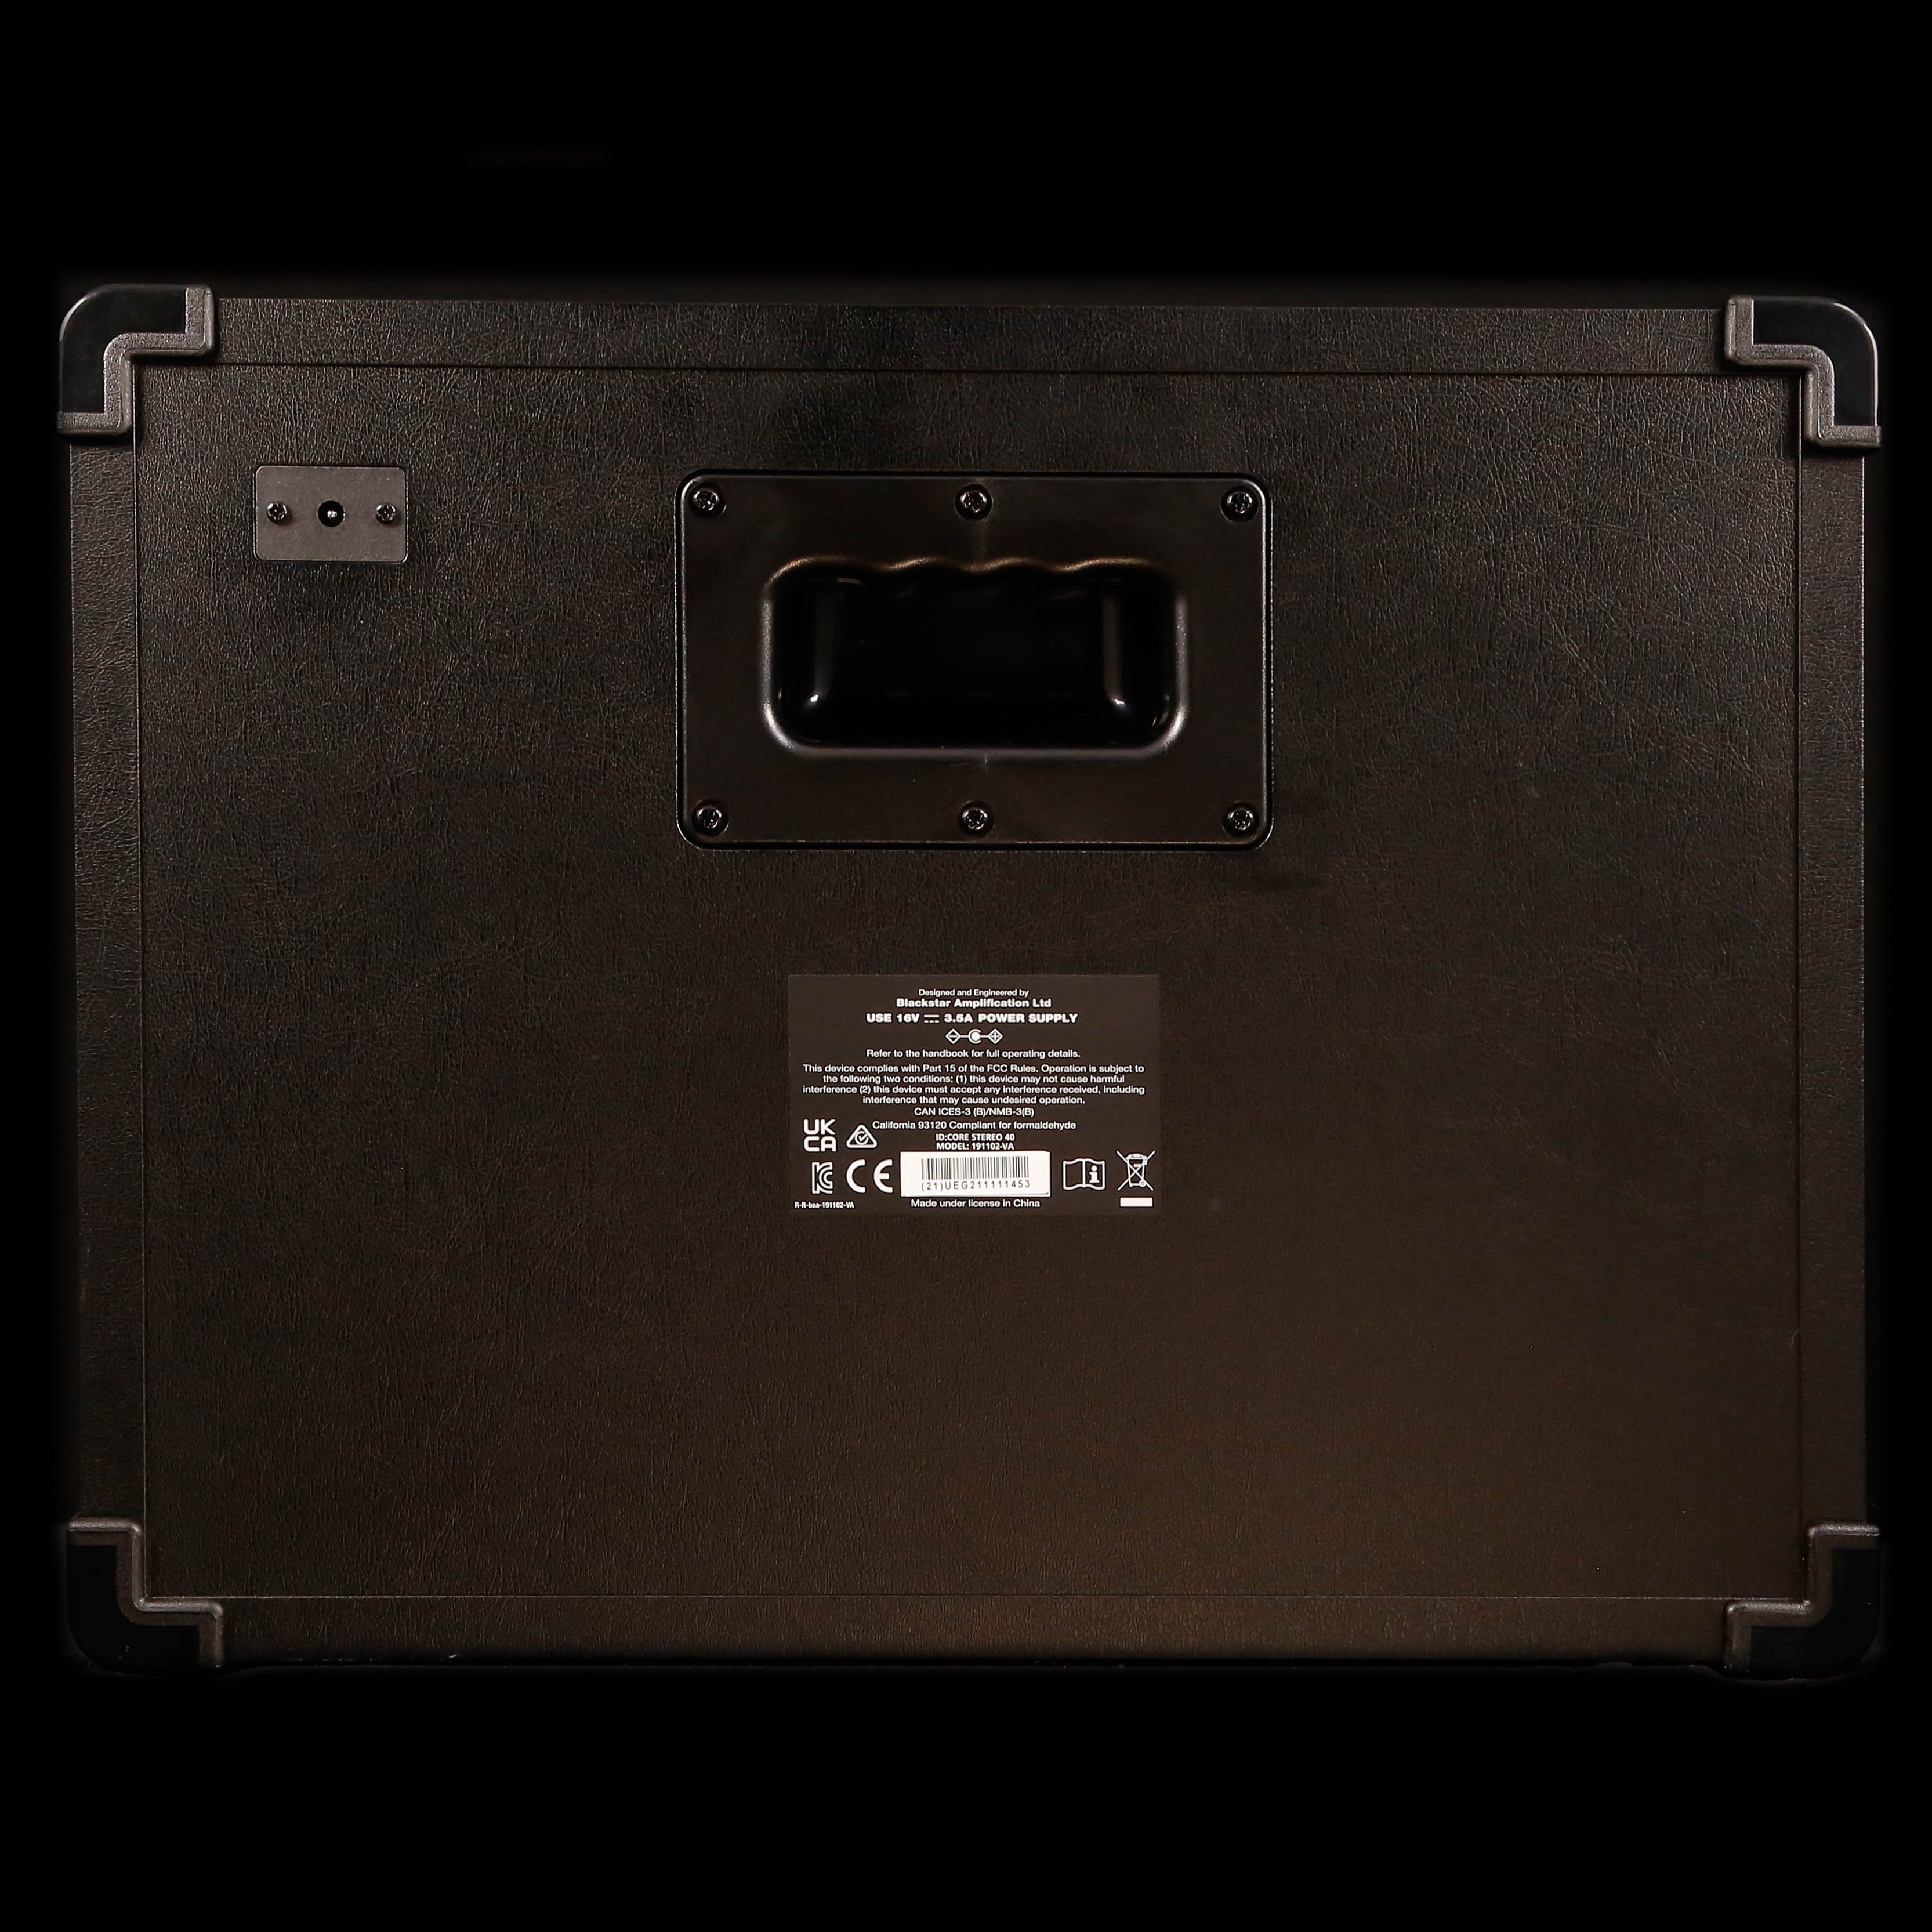 Blackstar IDCORE40V3 40W Digital Modeling Amplifier